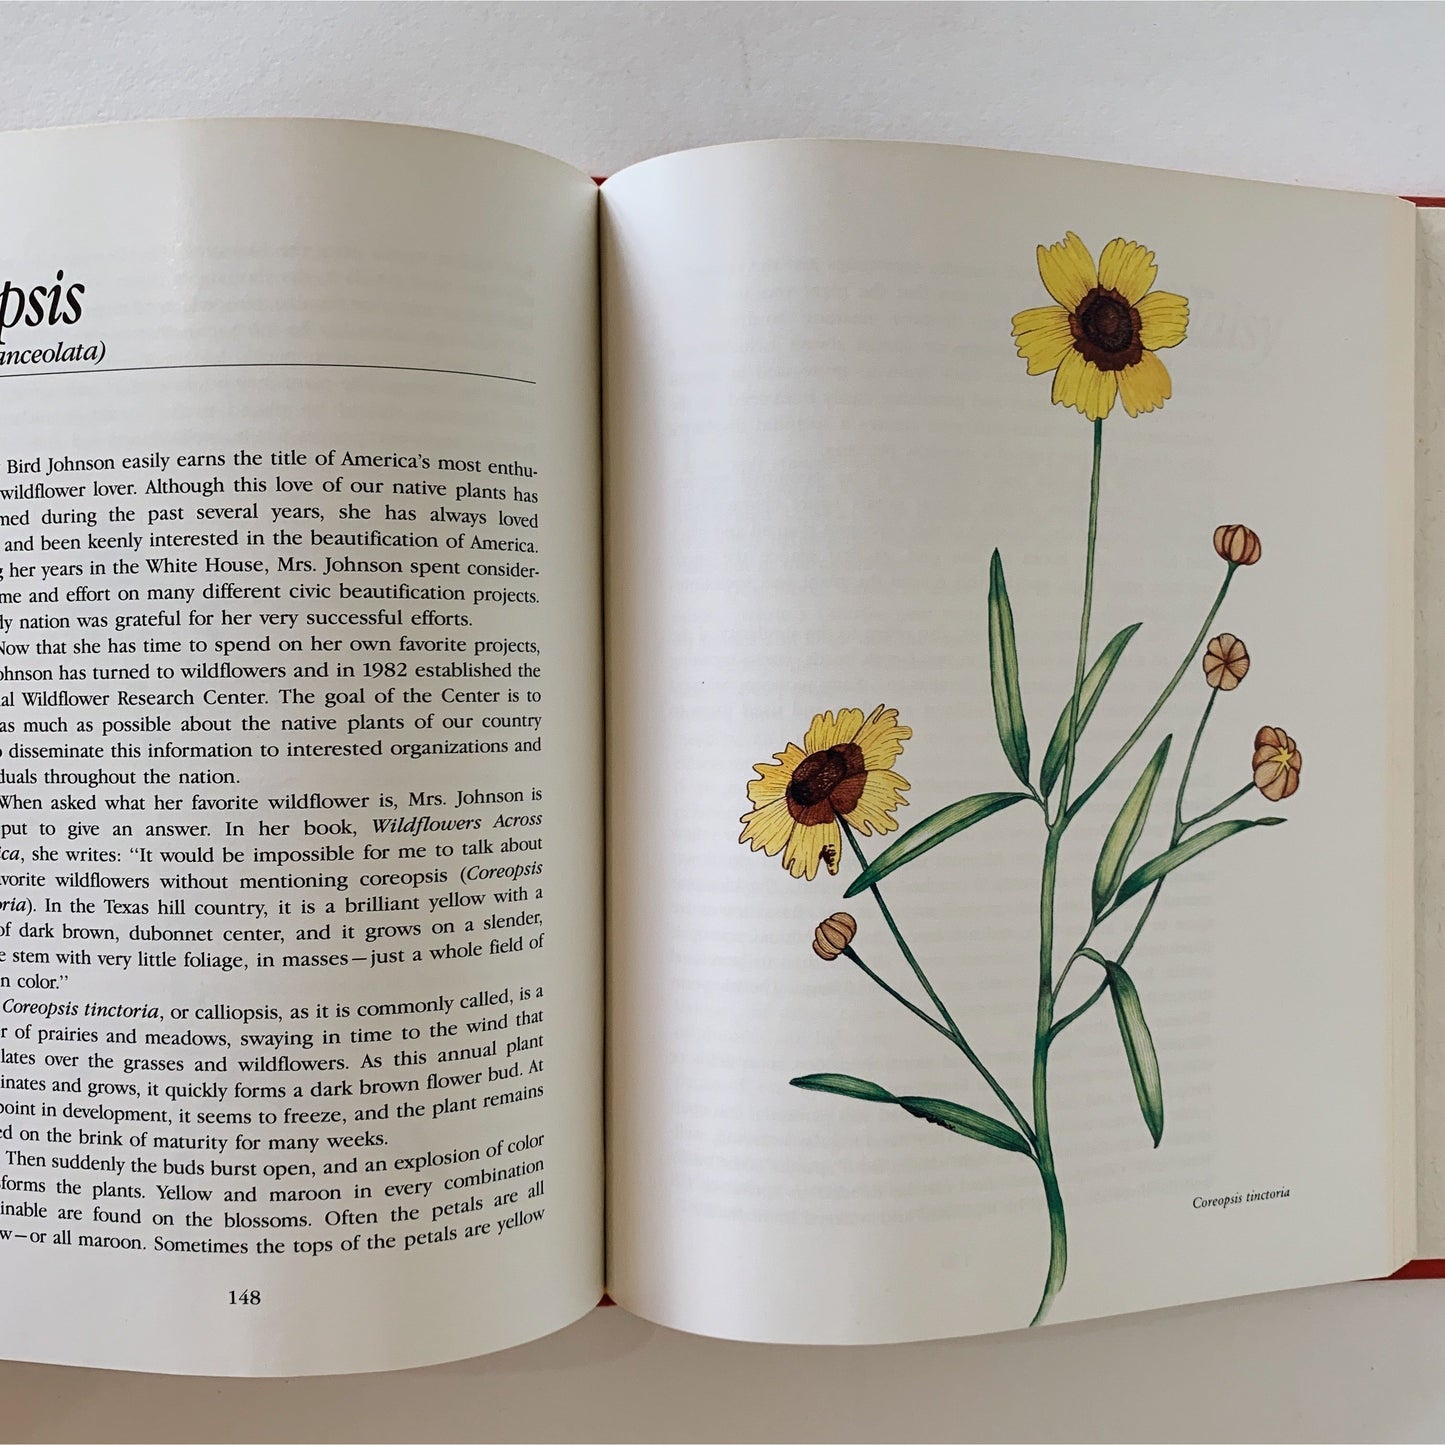 Southern Wildflowers, 1989, Laura C Martin, Botanical Illustrations